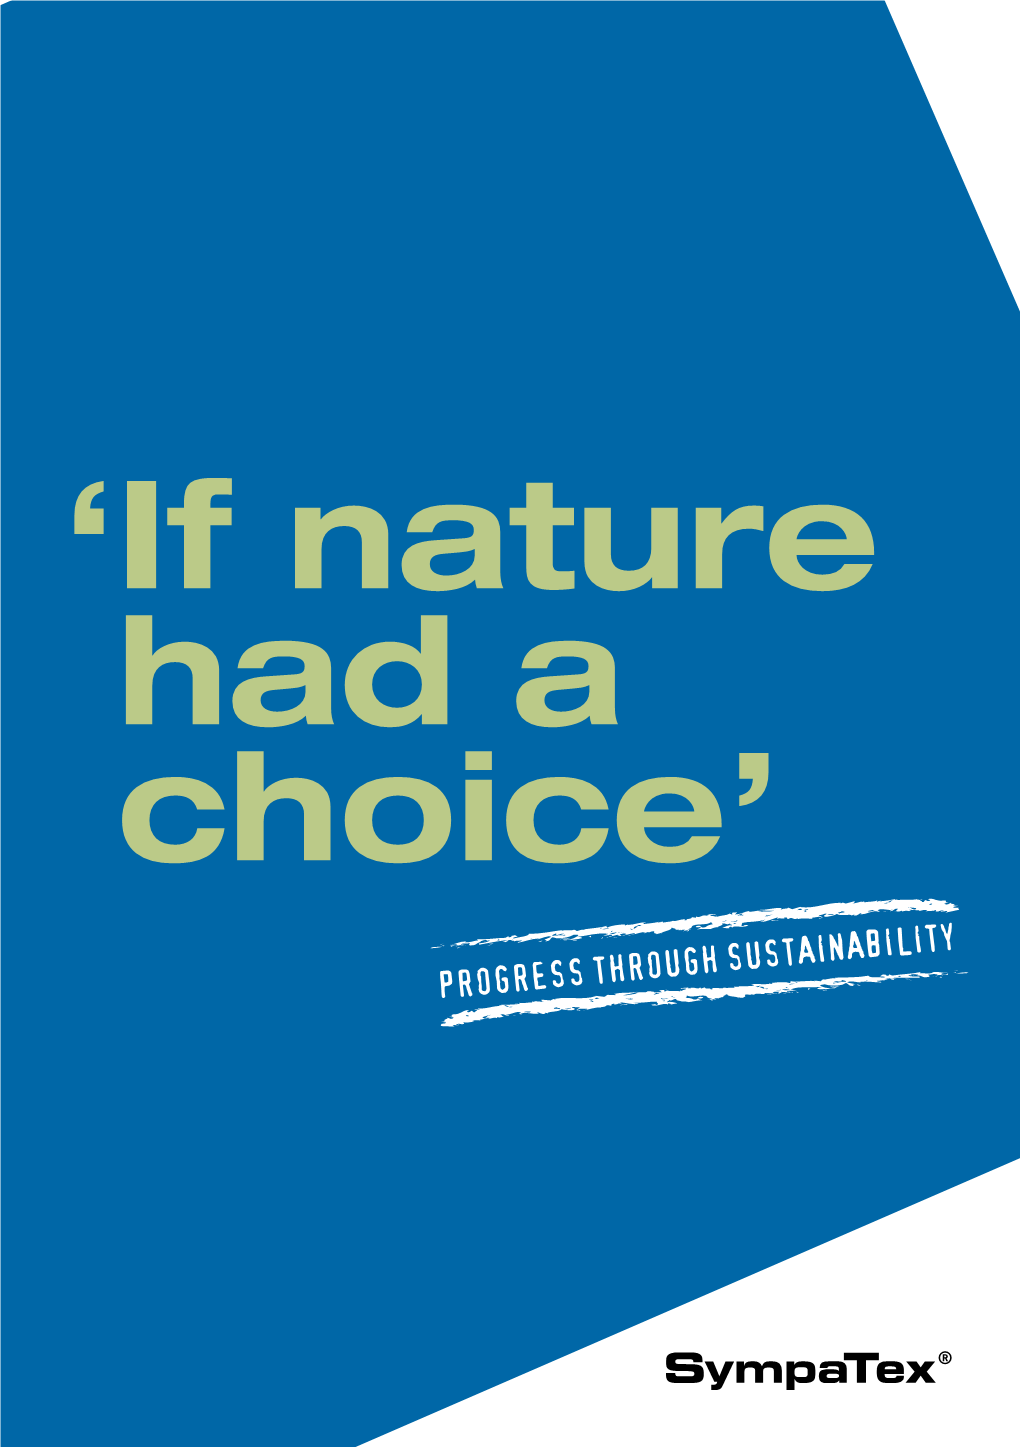 ' If Nature Had a Choice'